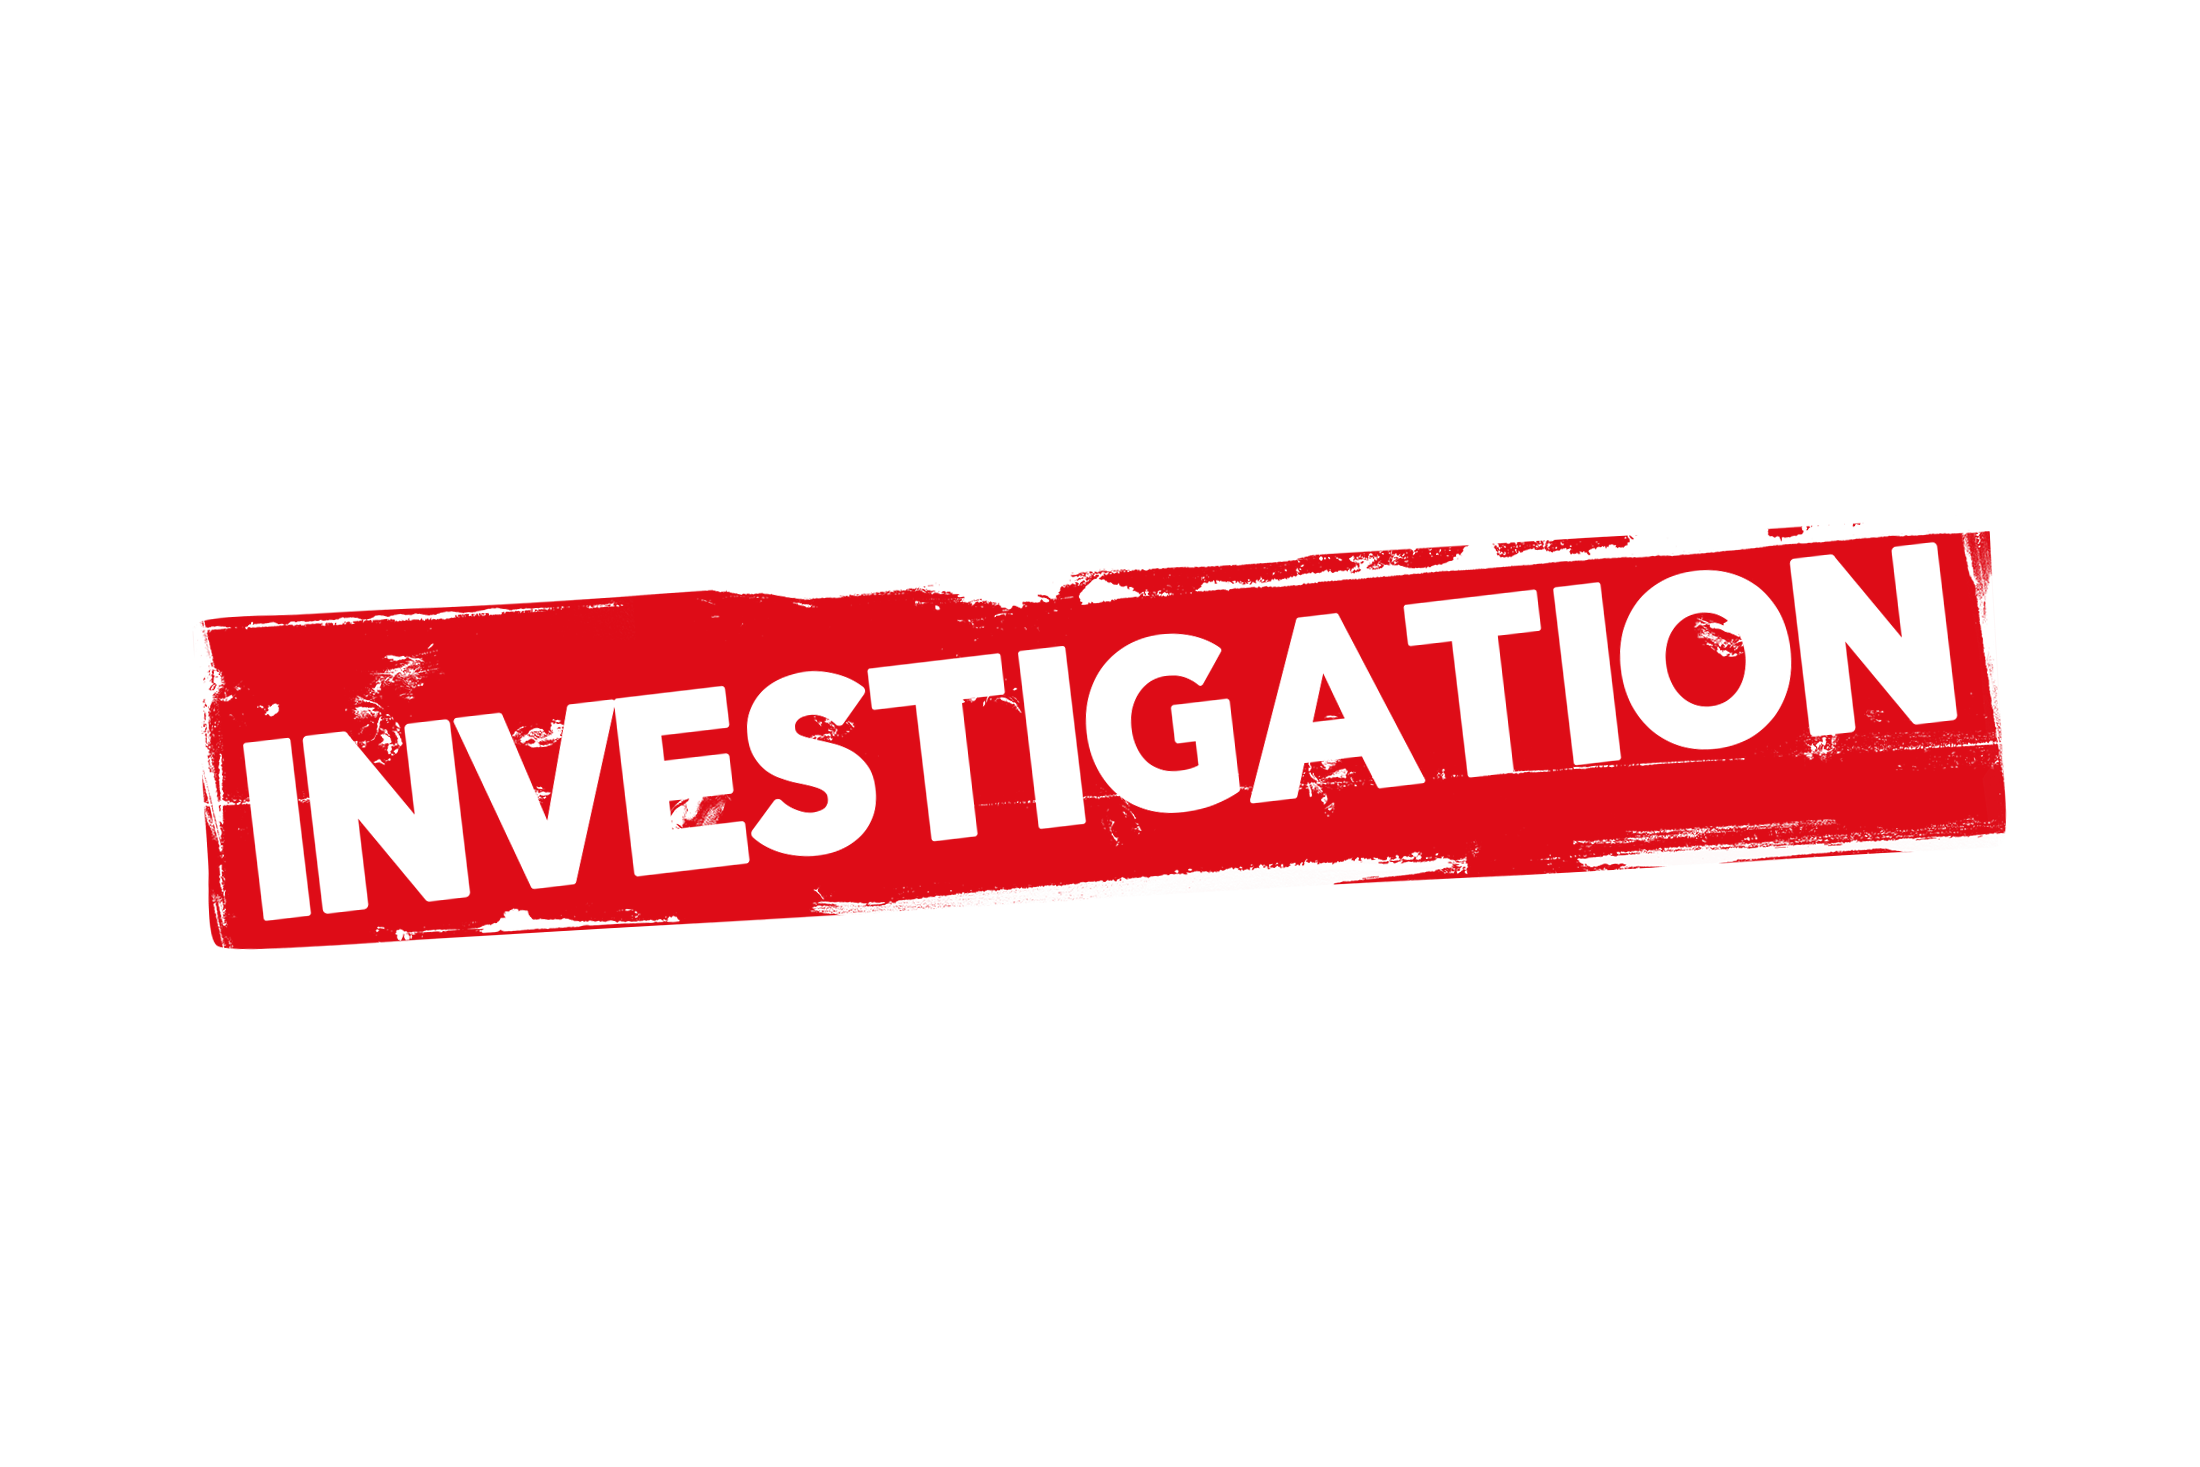 Grunge investigation label PSD